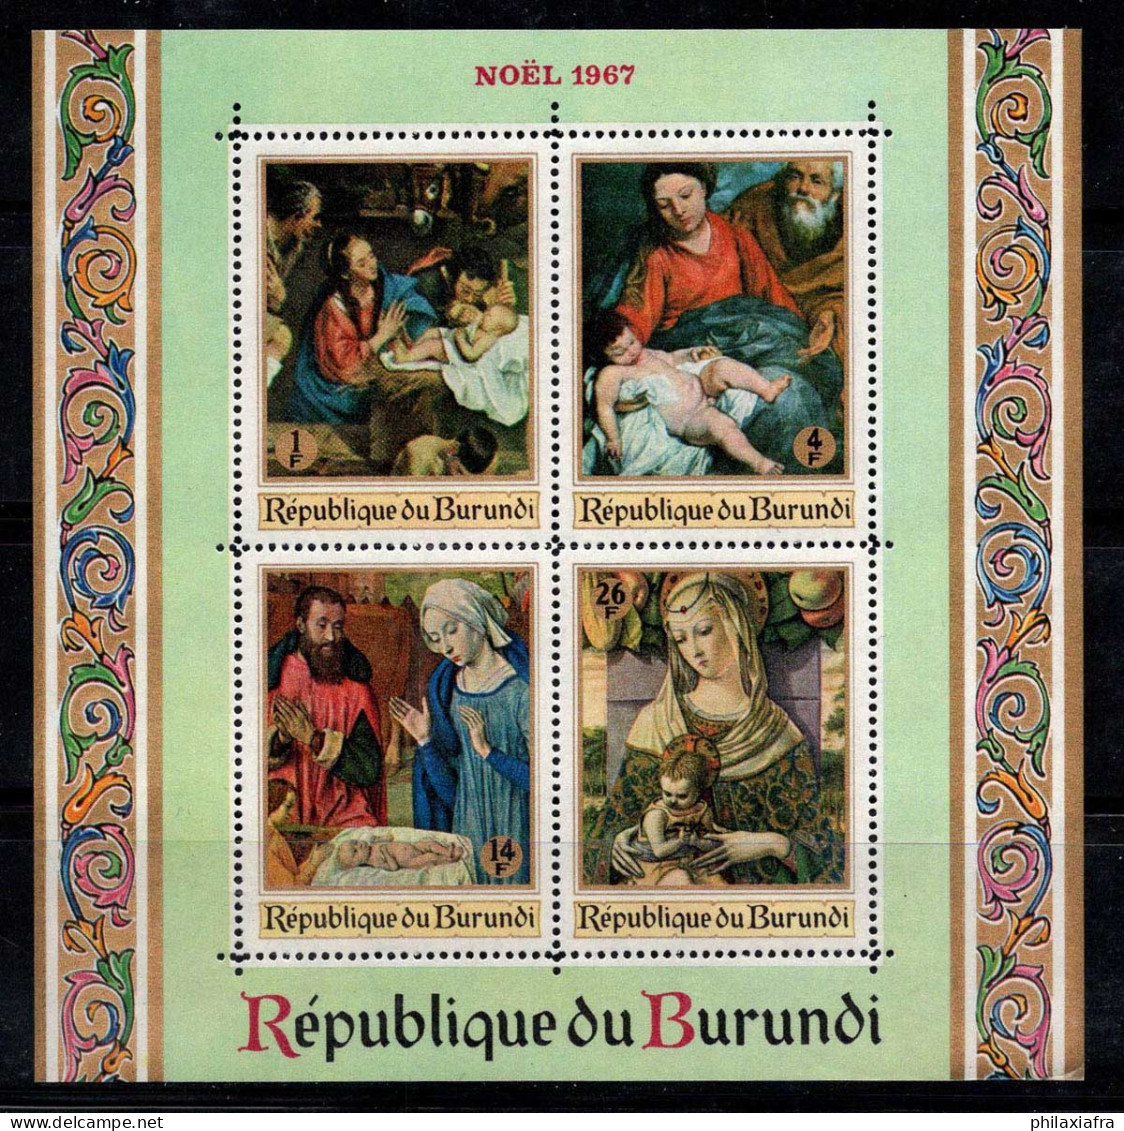 Burundi 1967 SG MS337 Bloc Feuillet 100% Neuf ** Noël, Peintures Religieuses - Unused Stamps